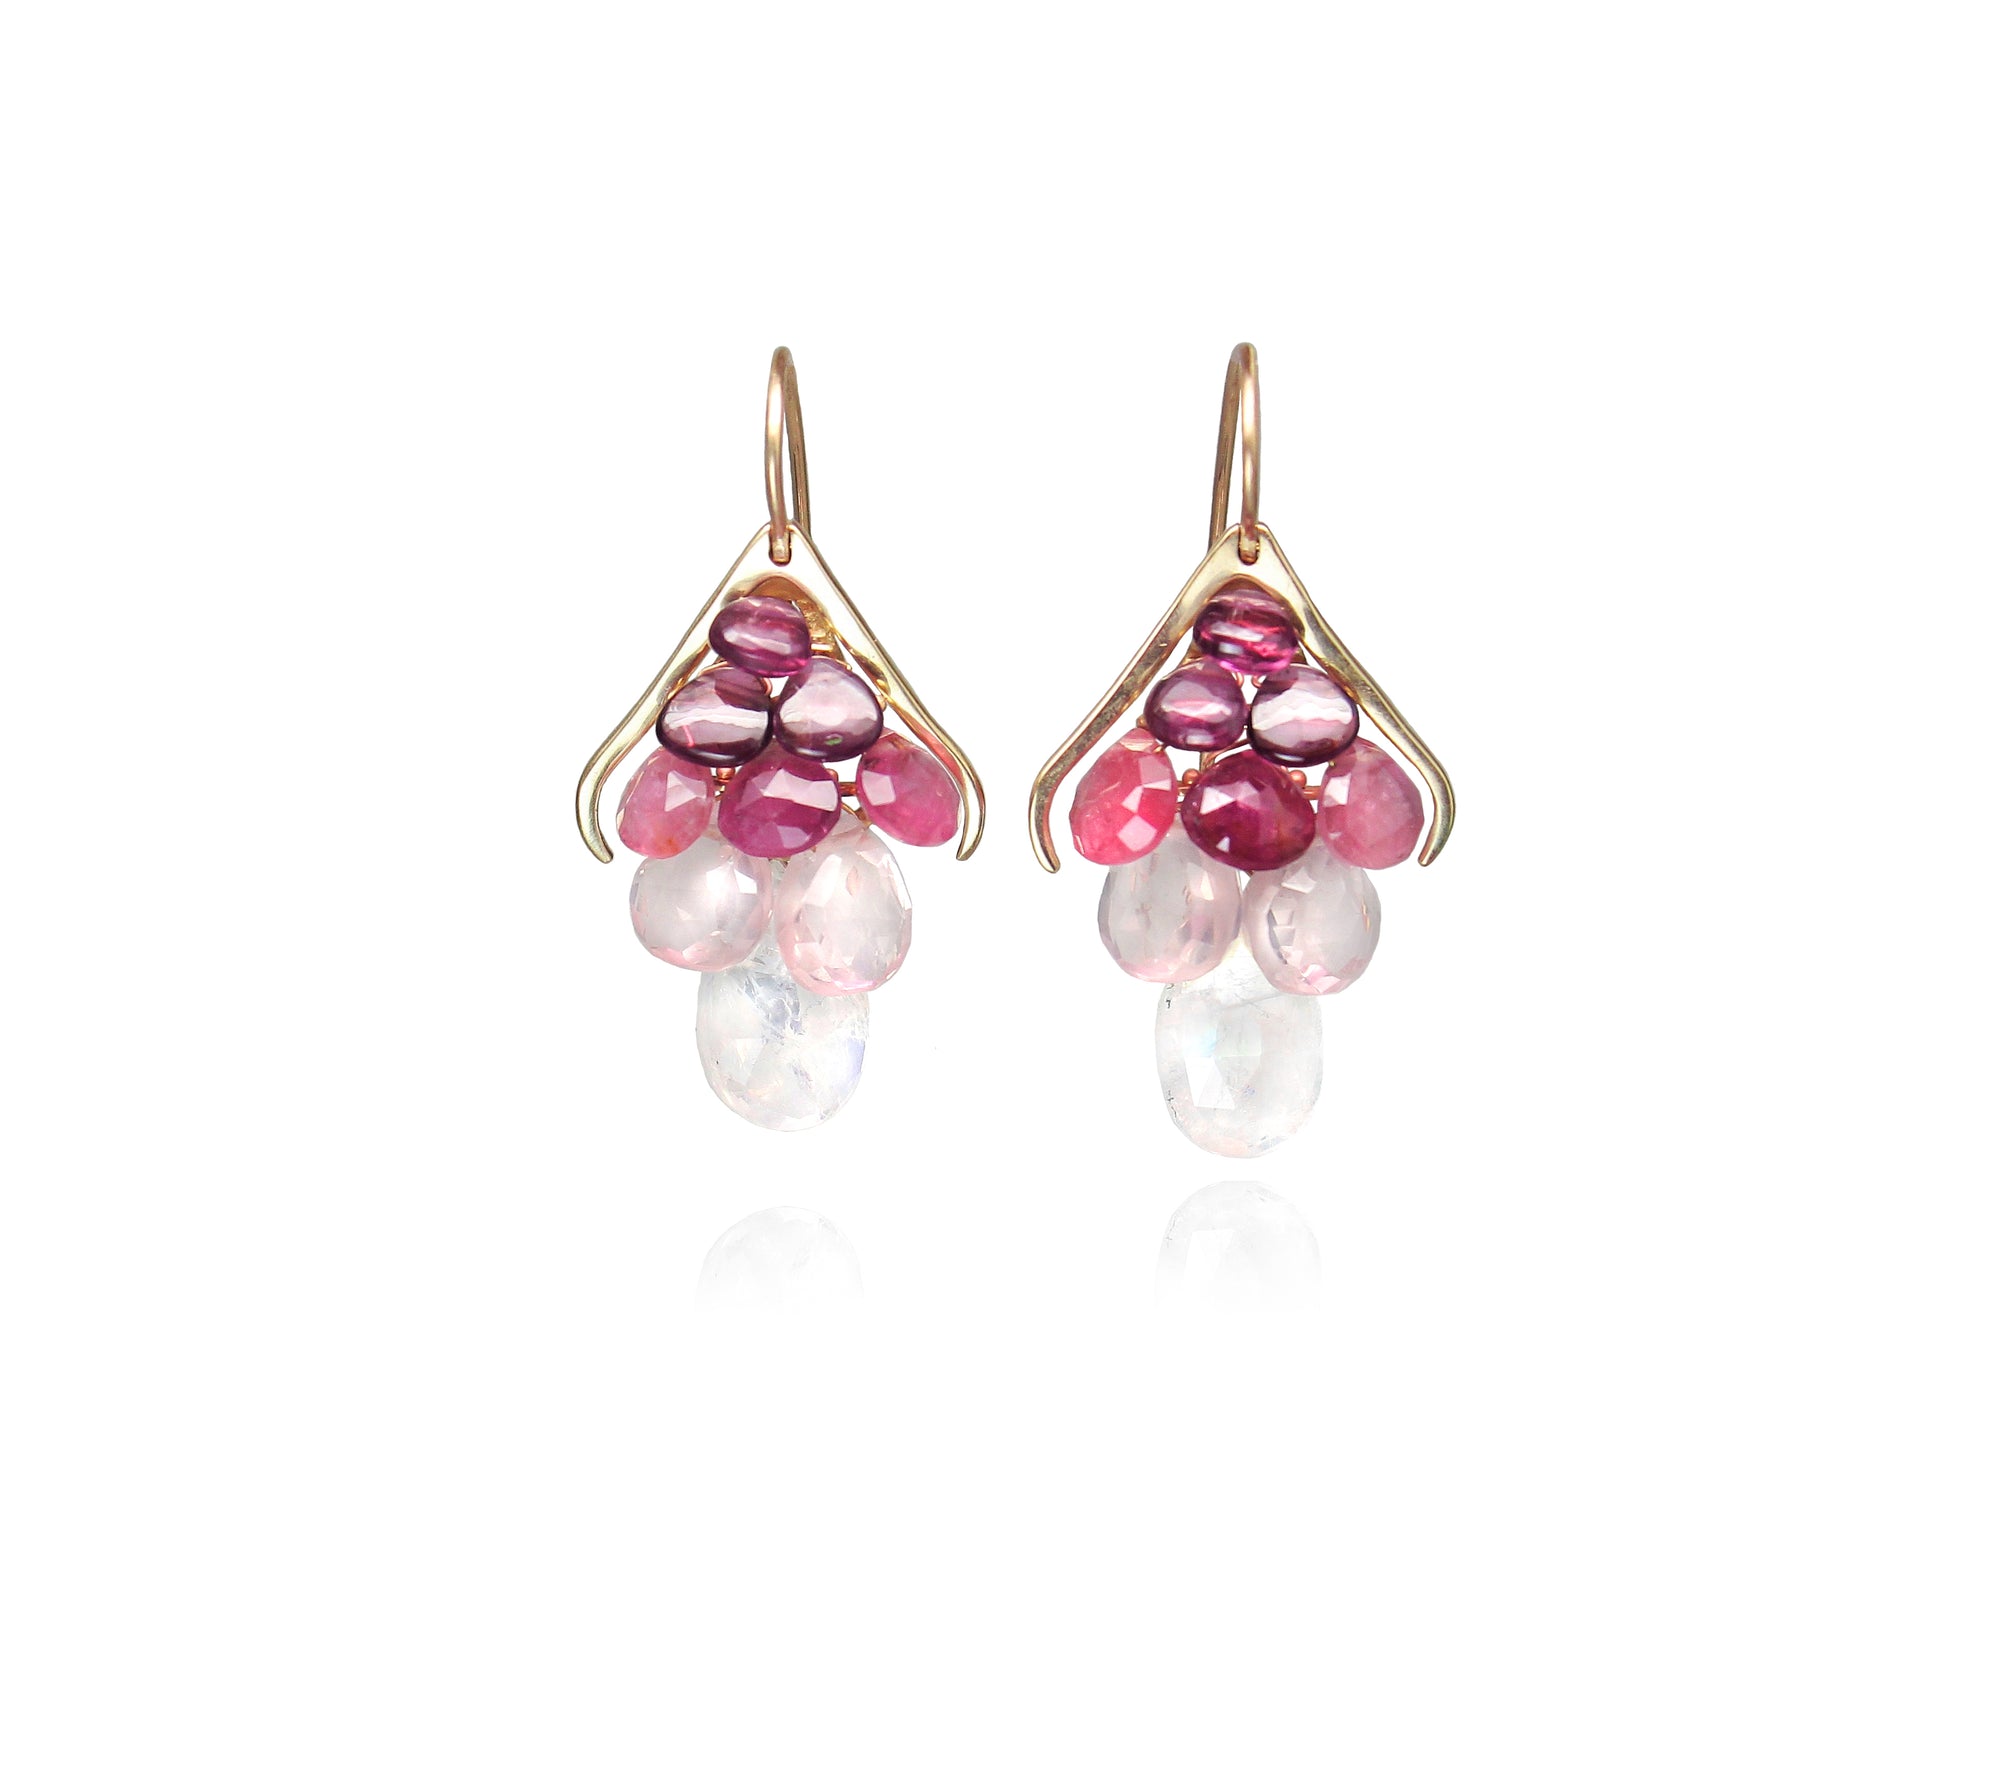 Small Plumage Earrings in Pink Tourmaline